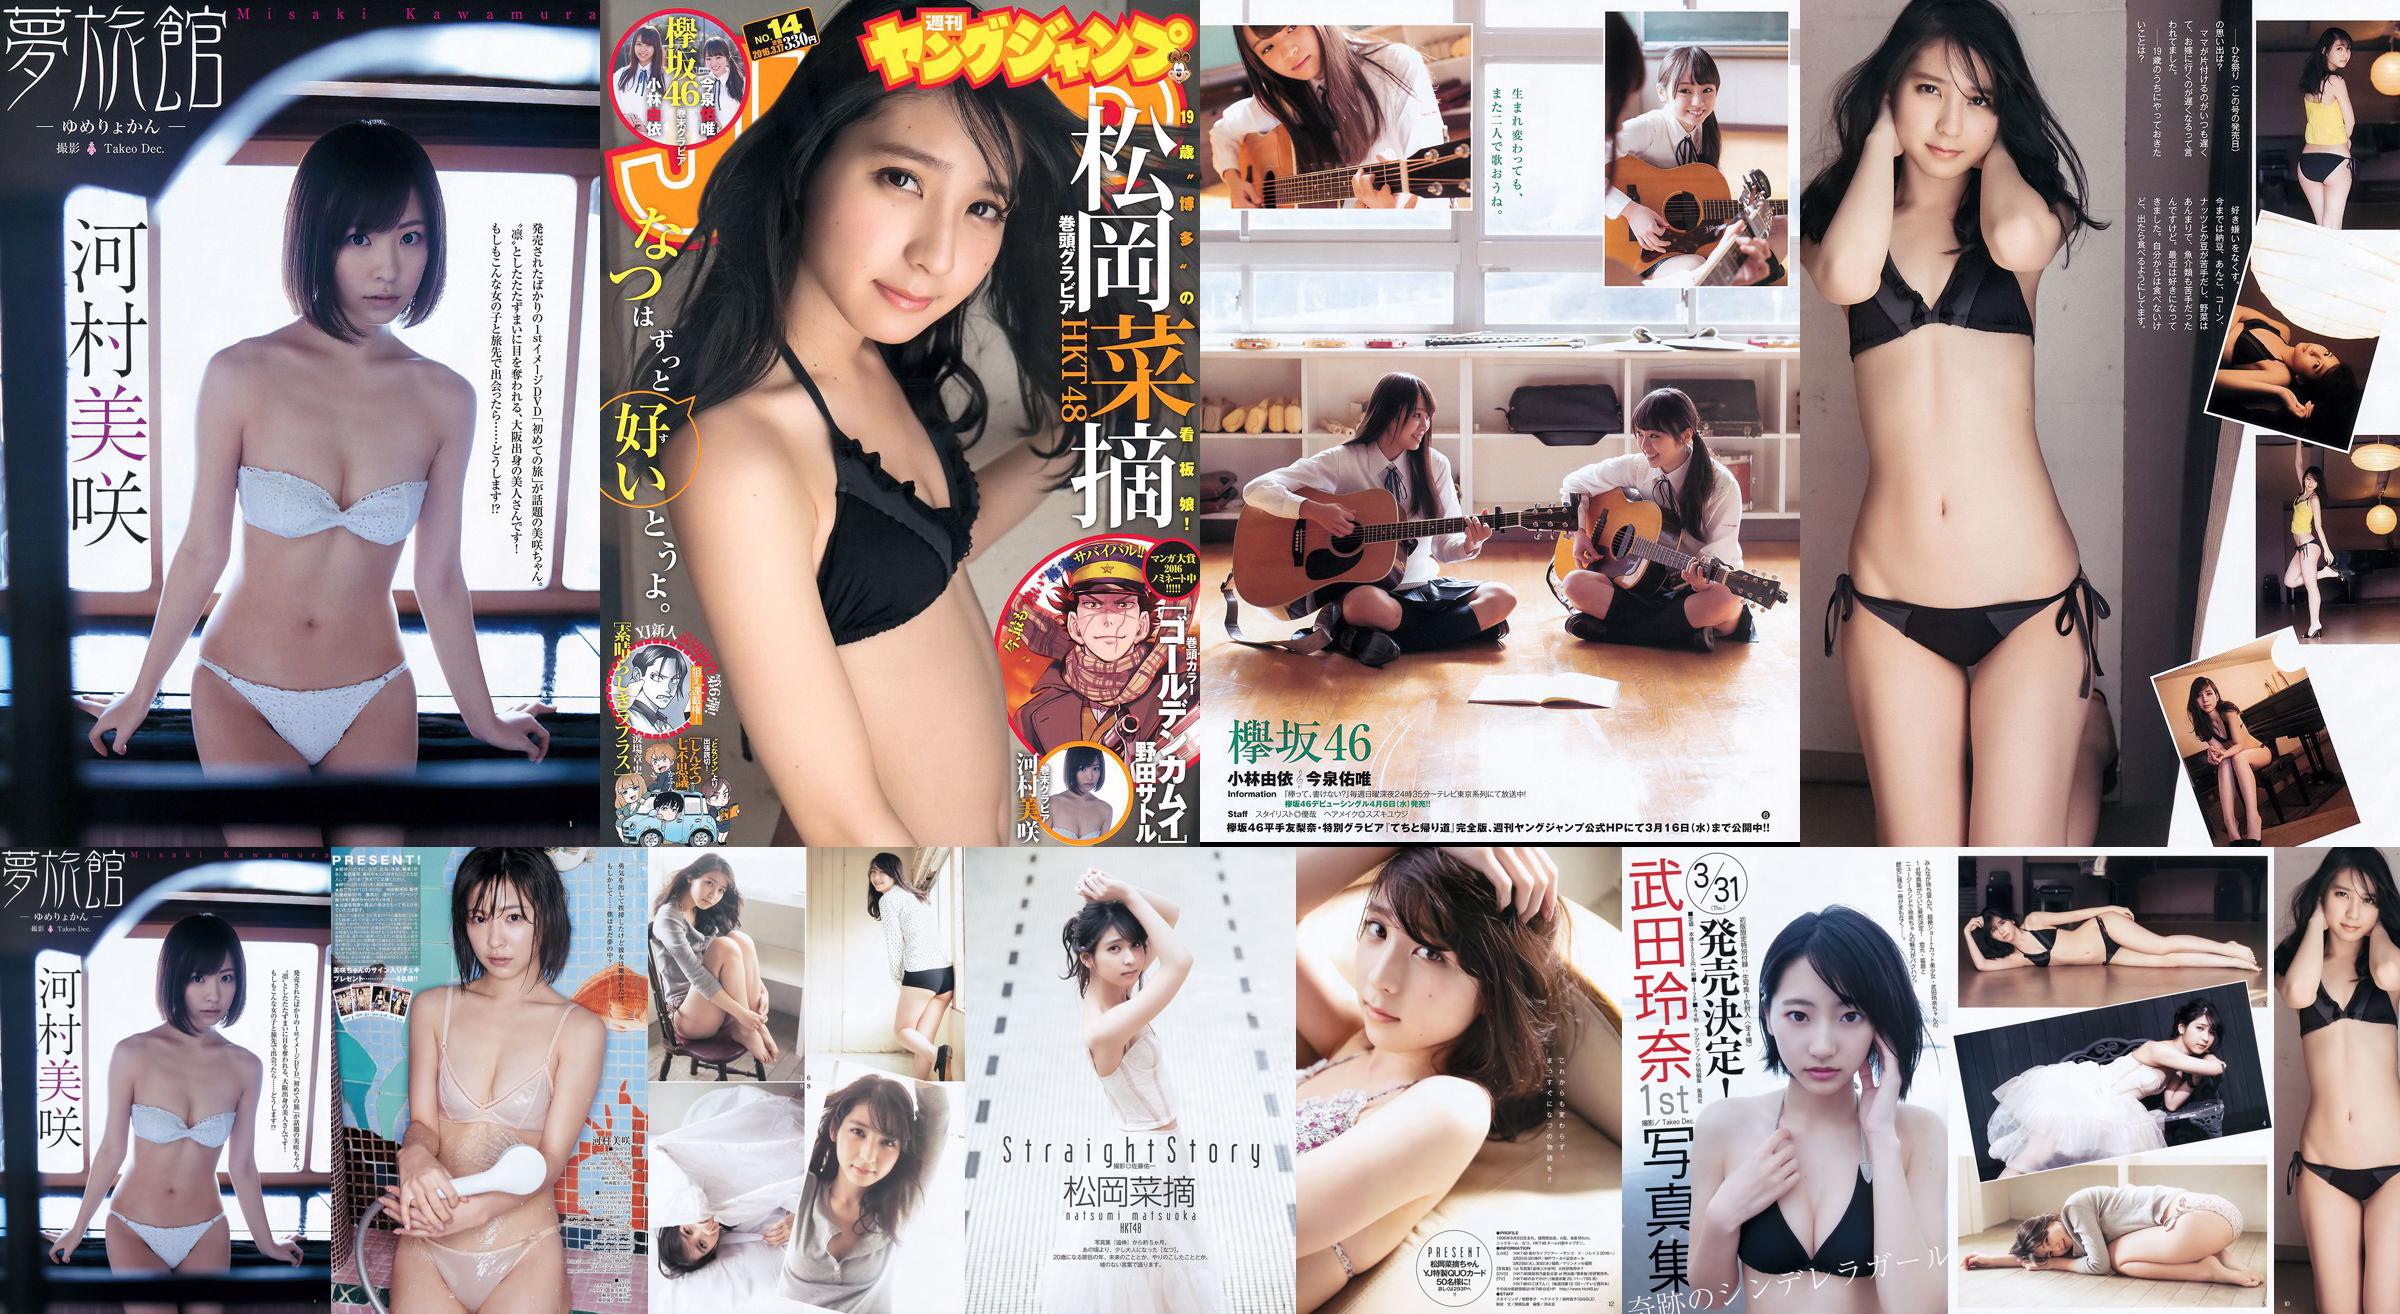 Choix de légumes Muraoka Yui Kobayashi Yui Imaizumi Misaki Kawamura [Weekly Young Jump] Magazine photo n ° 14 2016 No.209f43 Page 3